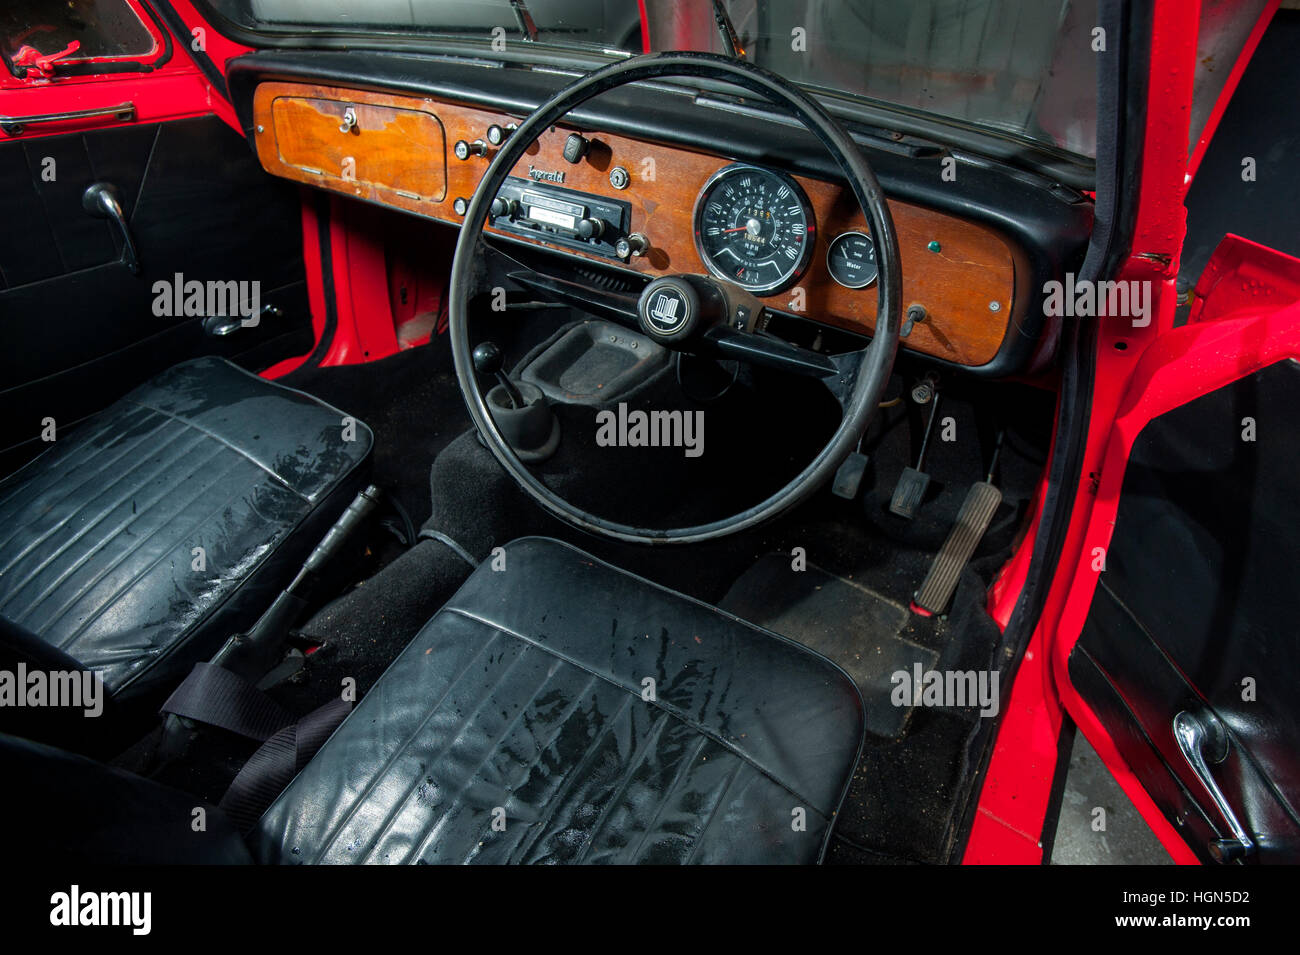 Triumph Herald coupe classic British car interior Stock Photo